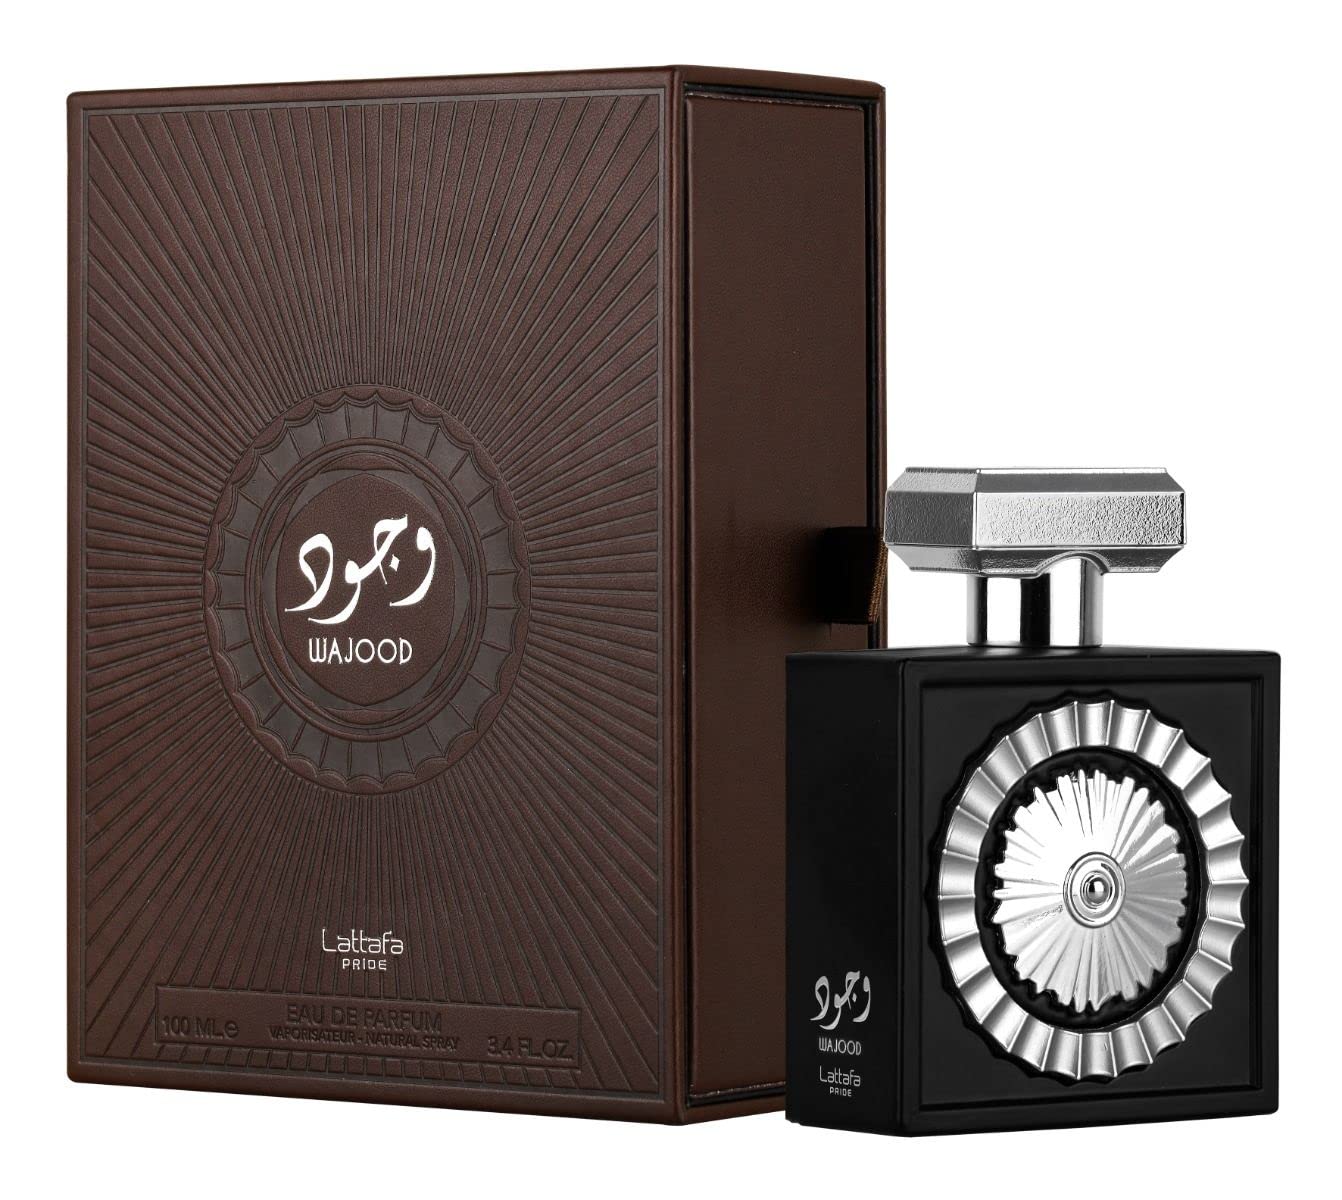 Wajood EDP (100ml) perfume spray by Lattafa | Khan El Khalili